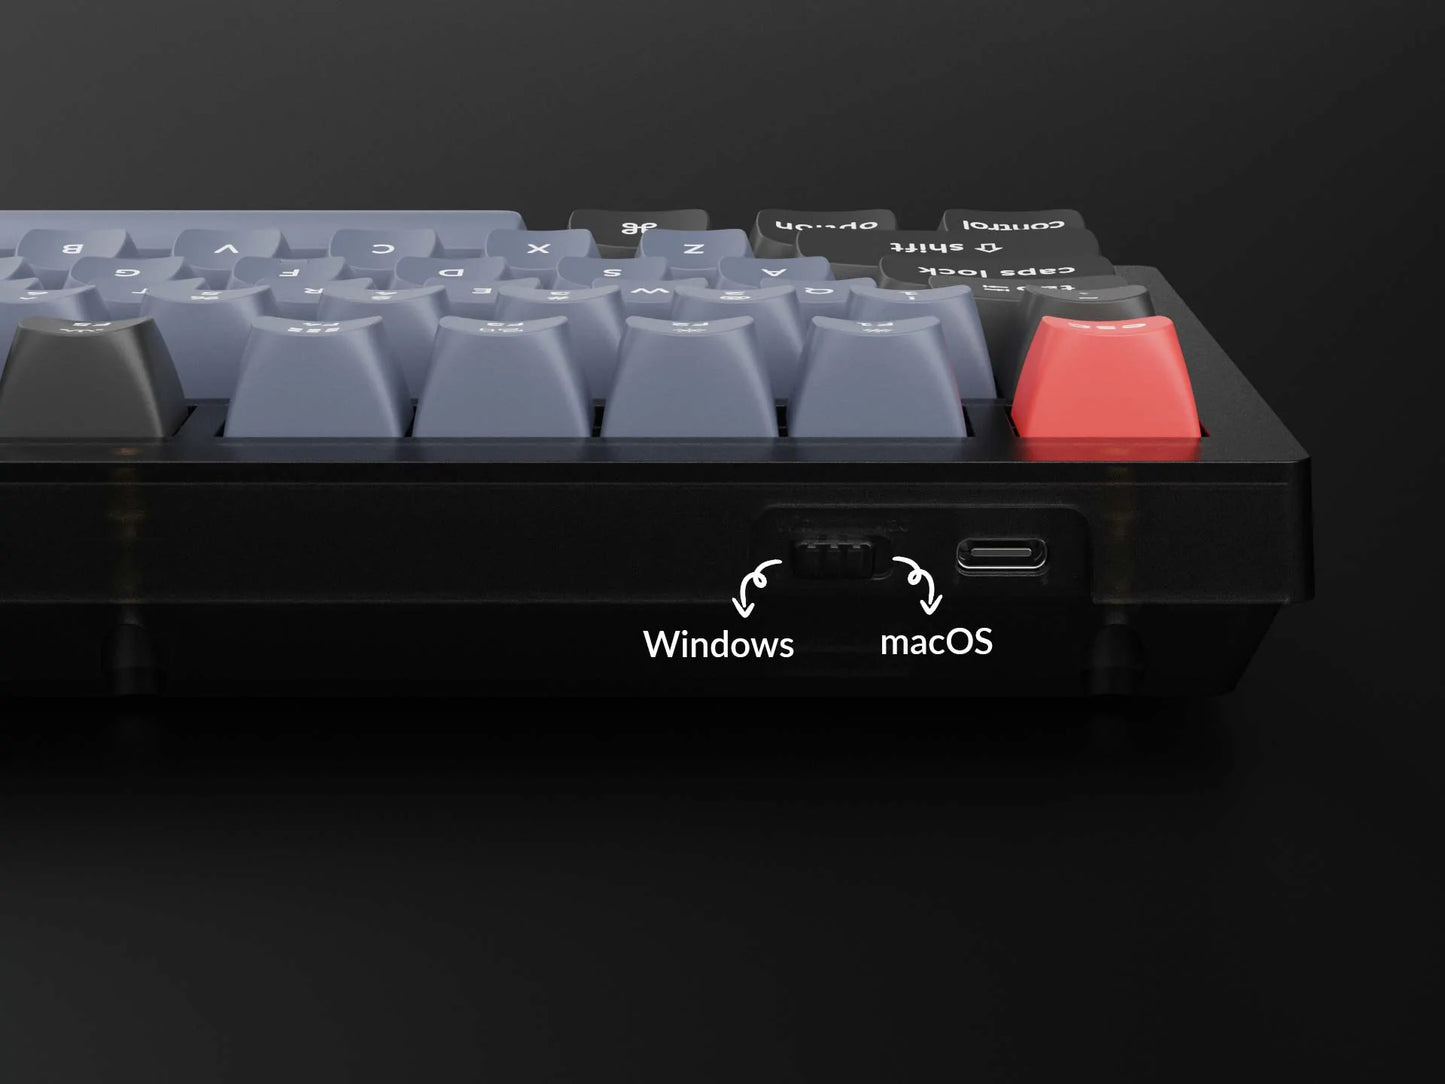 Keychron V1 - QMK Compatible Barebones Keyboard Kit